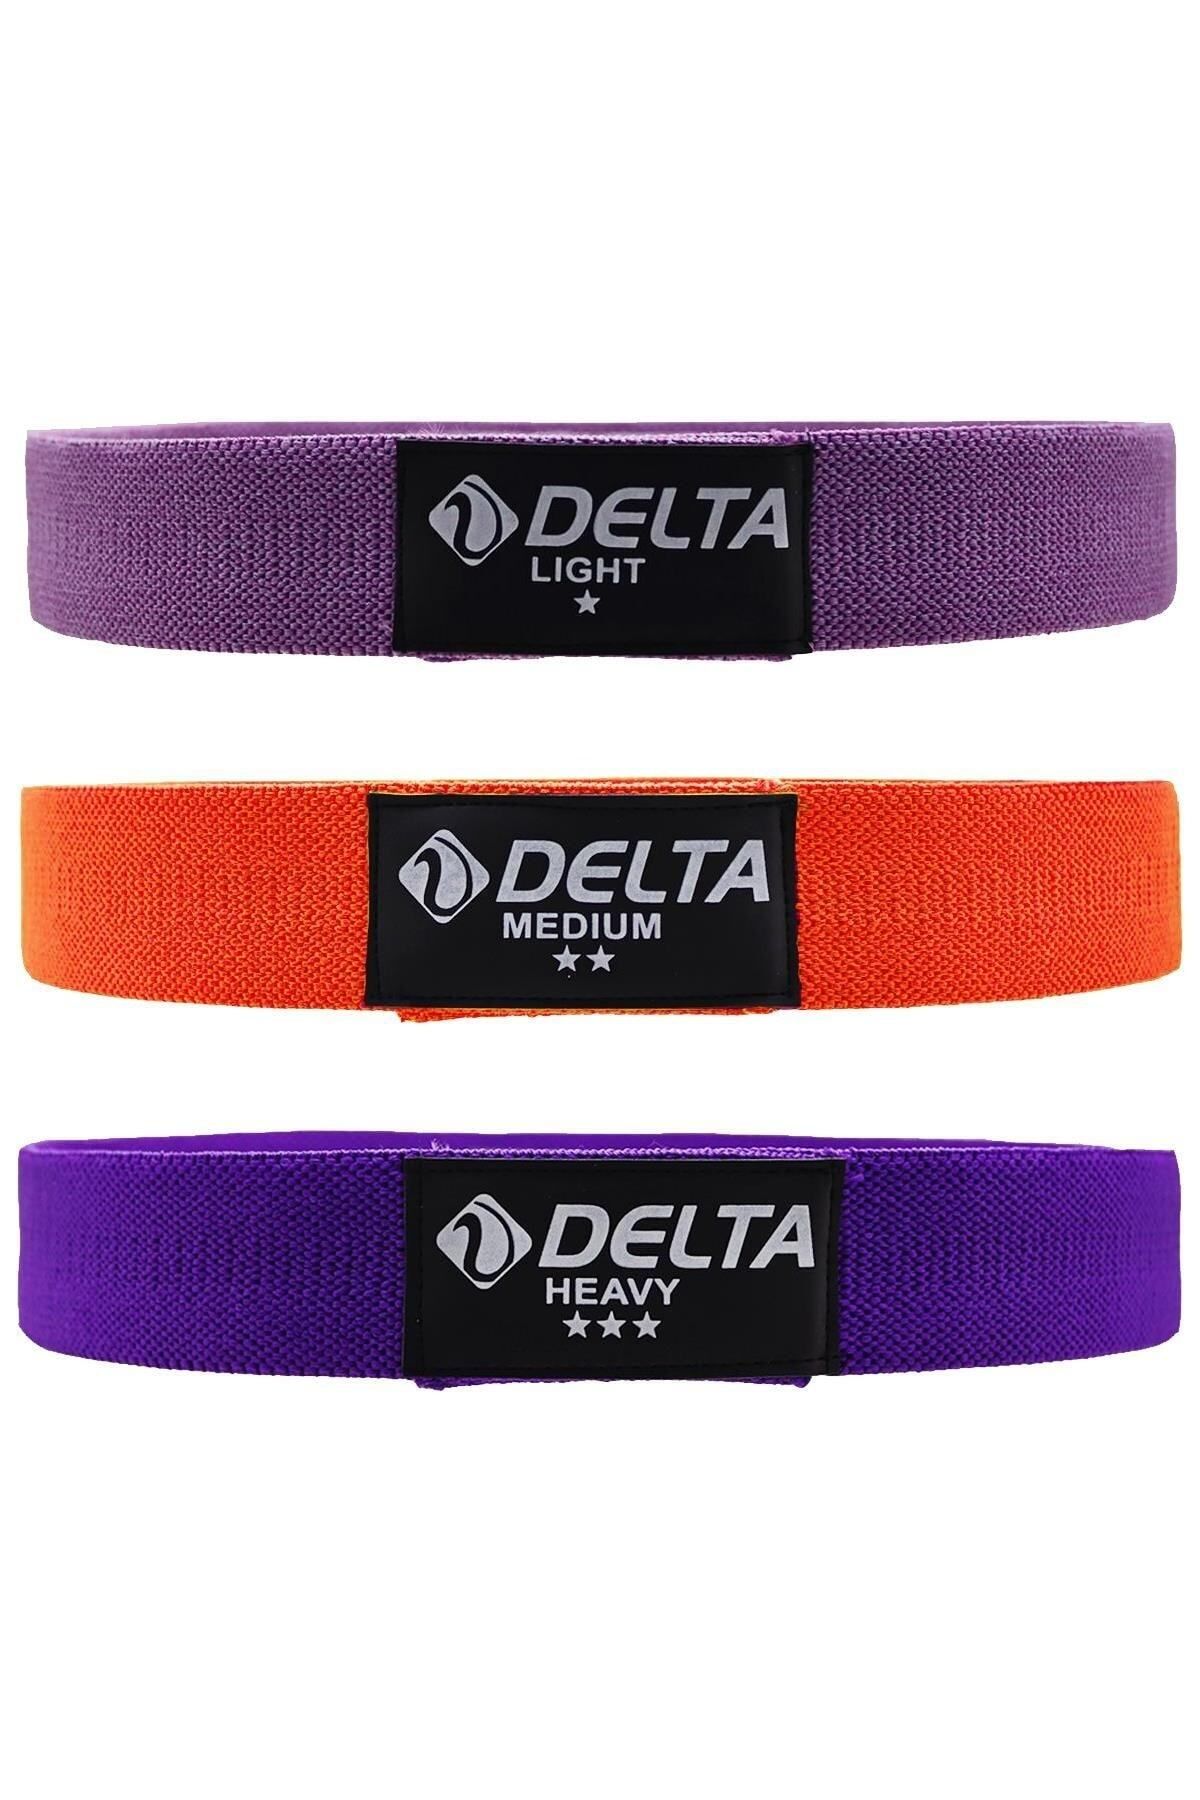 Delta 3 Adet Squat Bant Pilates Fitness Kalça Egzersizi Direnç Bandı Lastiği Seti (Uç Kısmı Kapalı)